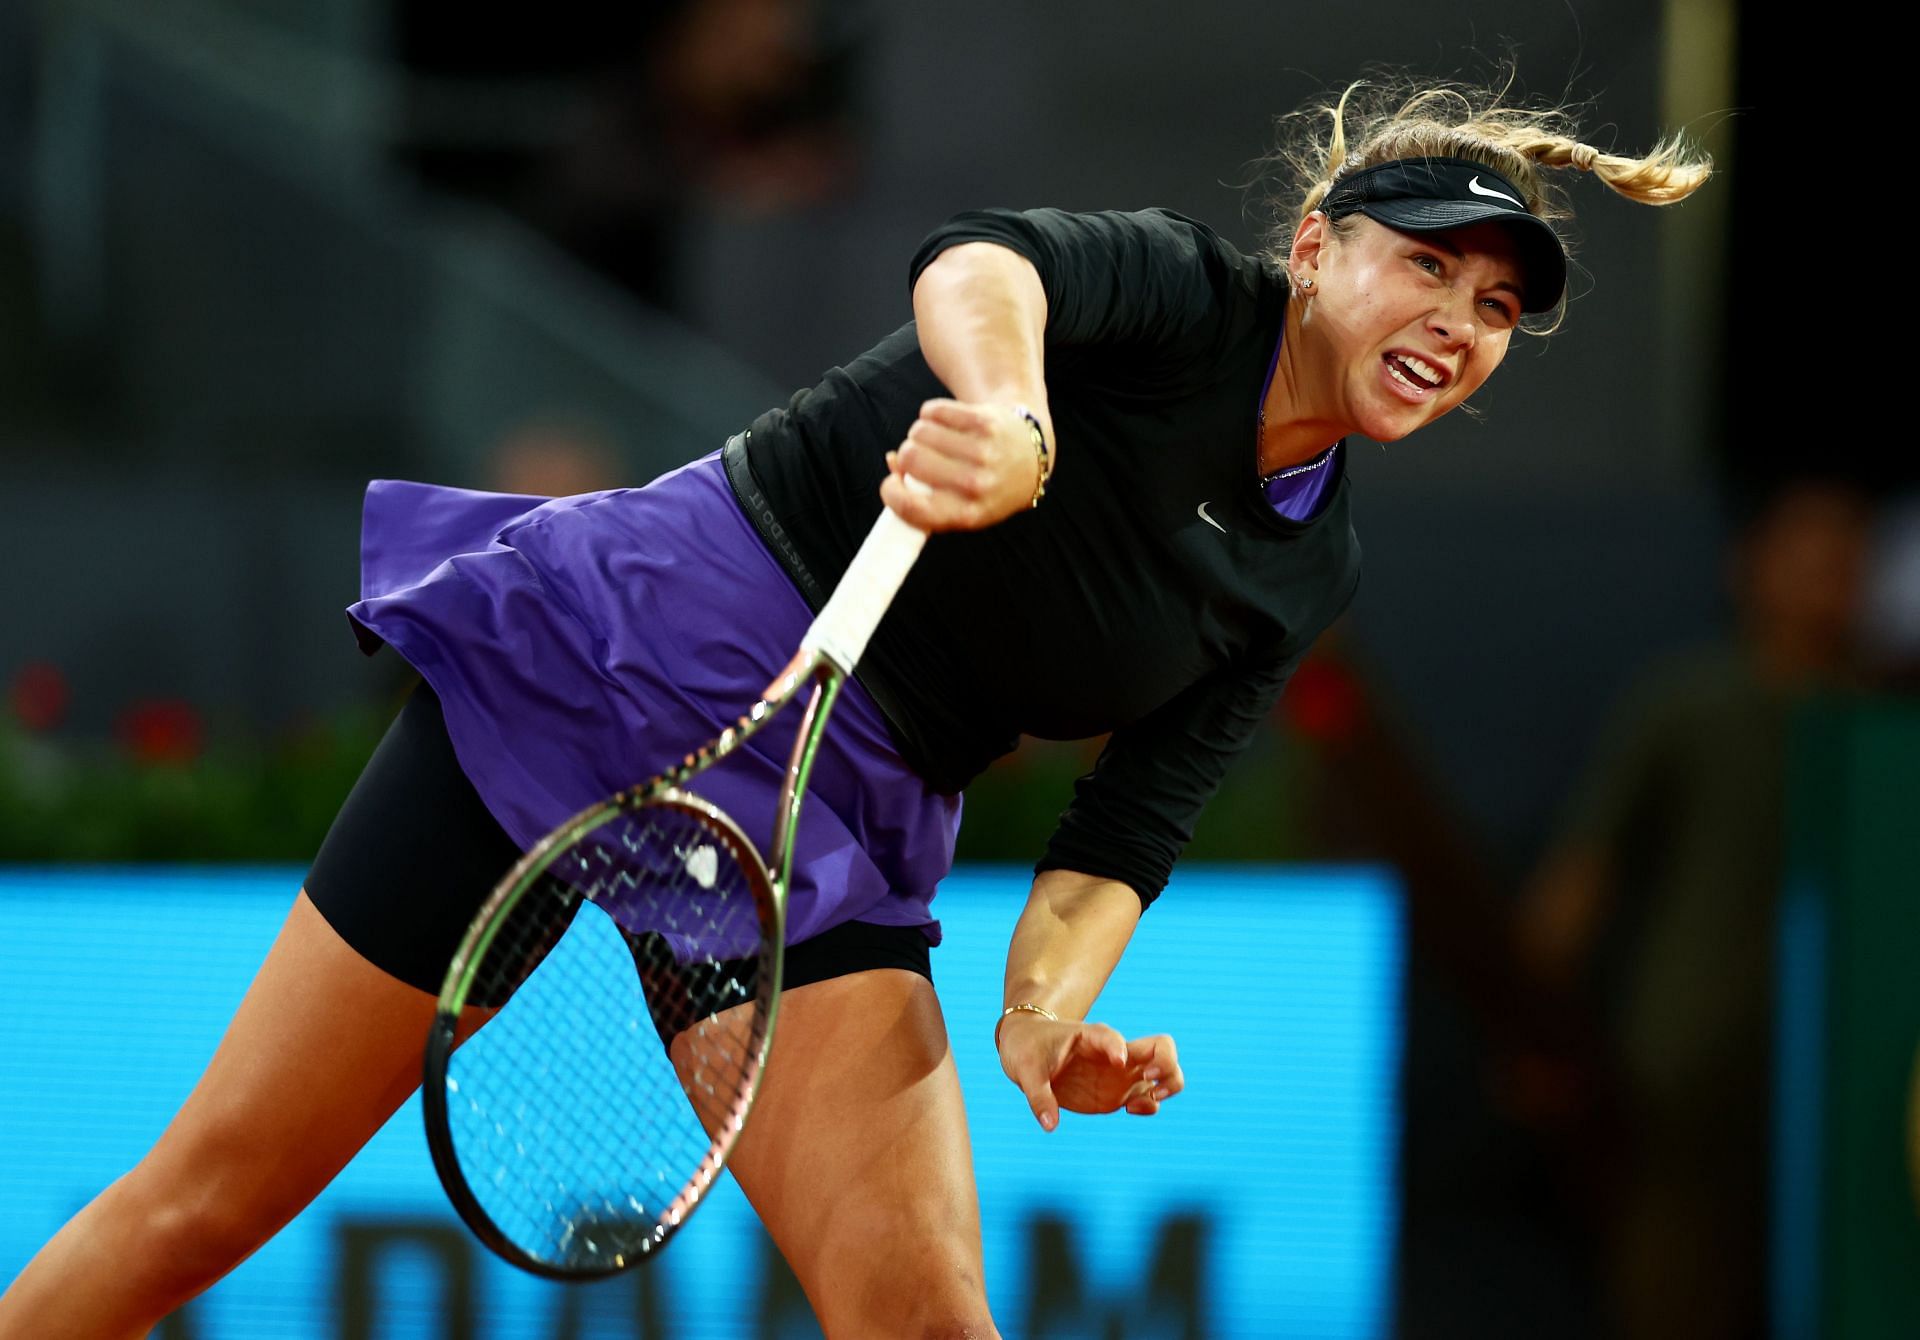 Anisimova serves at the Madrid Open